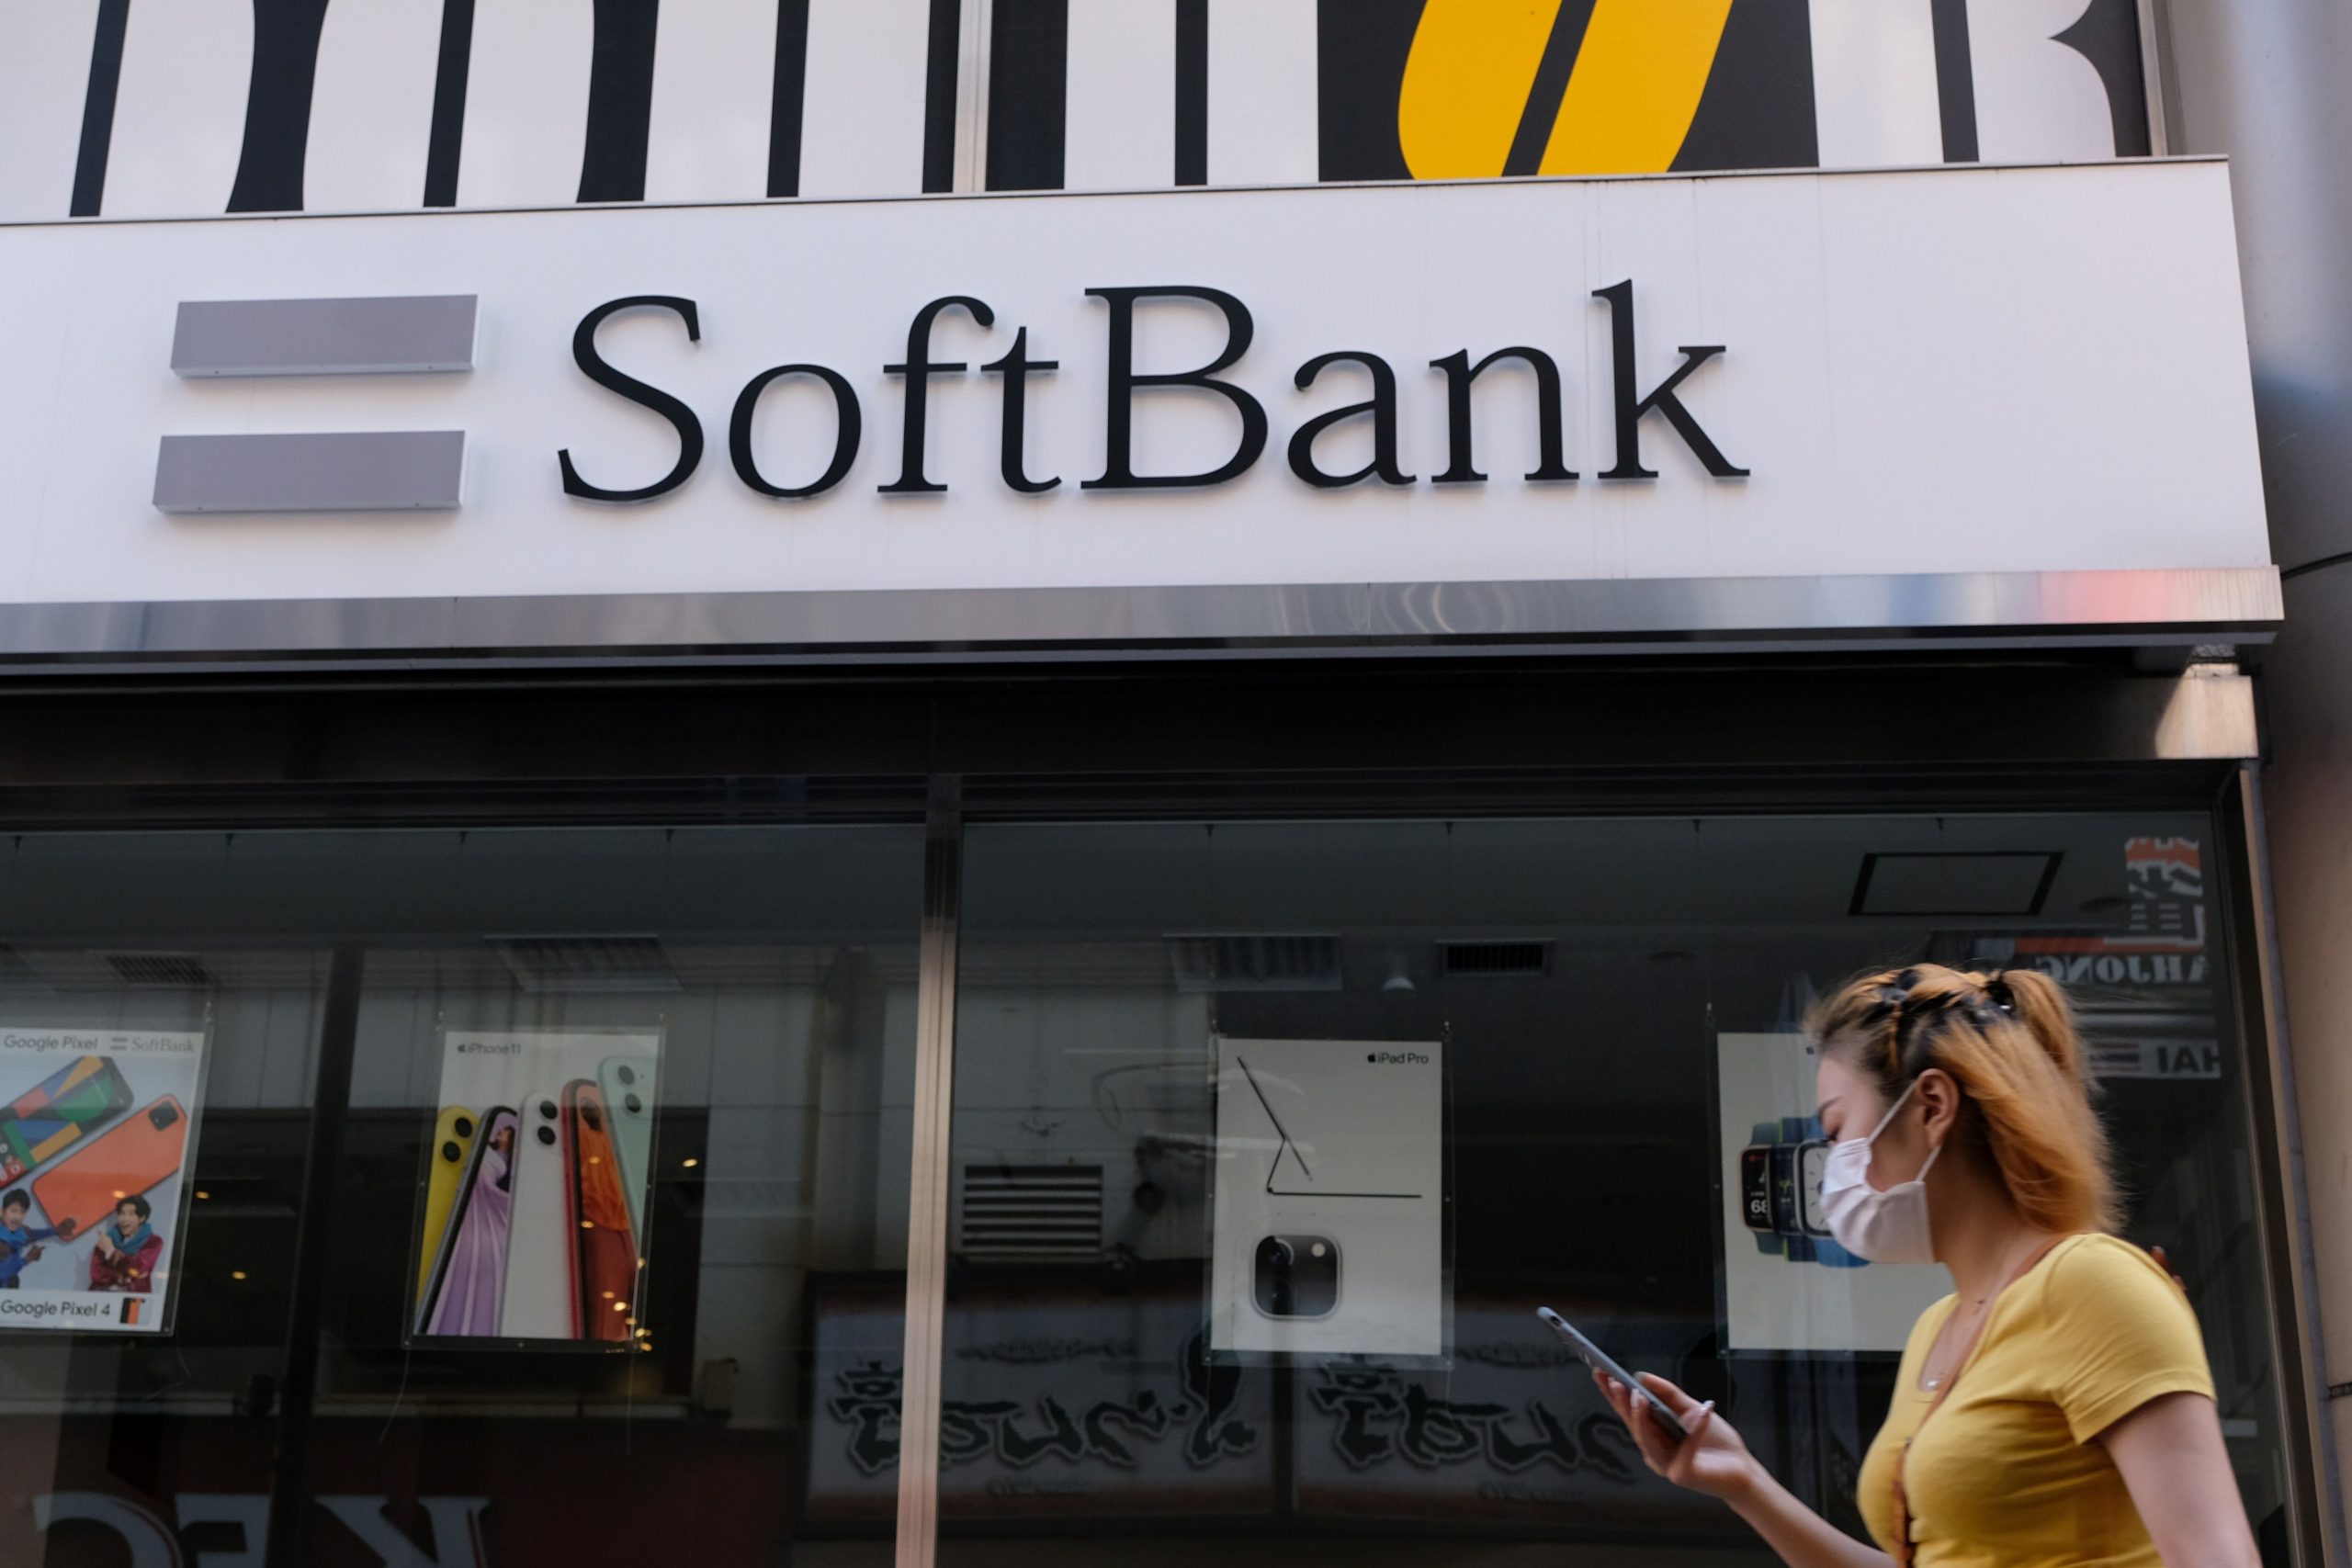 Paytm tanks 10% amid SoftBank stake sale reports